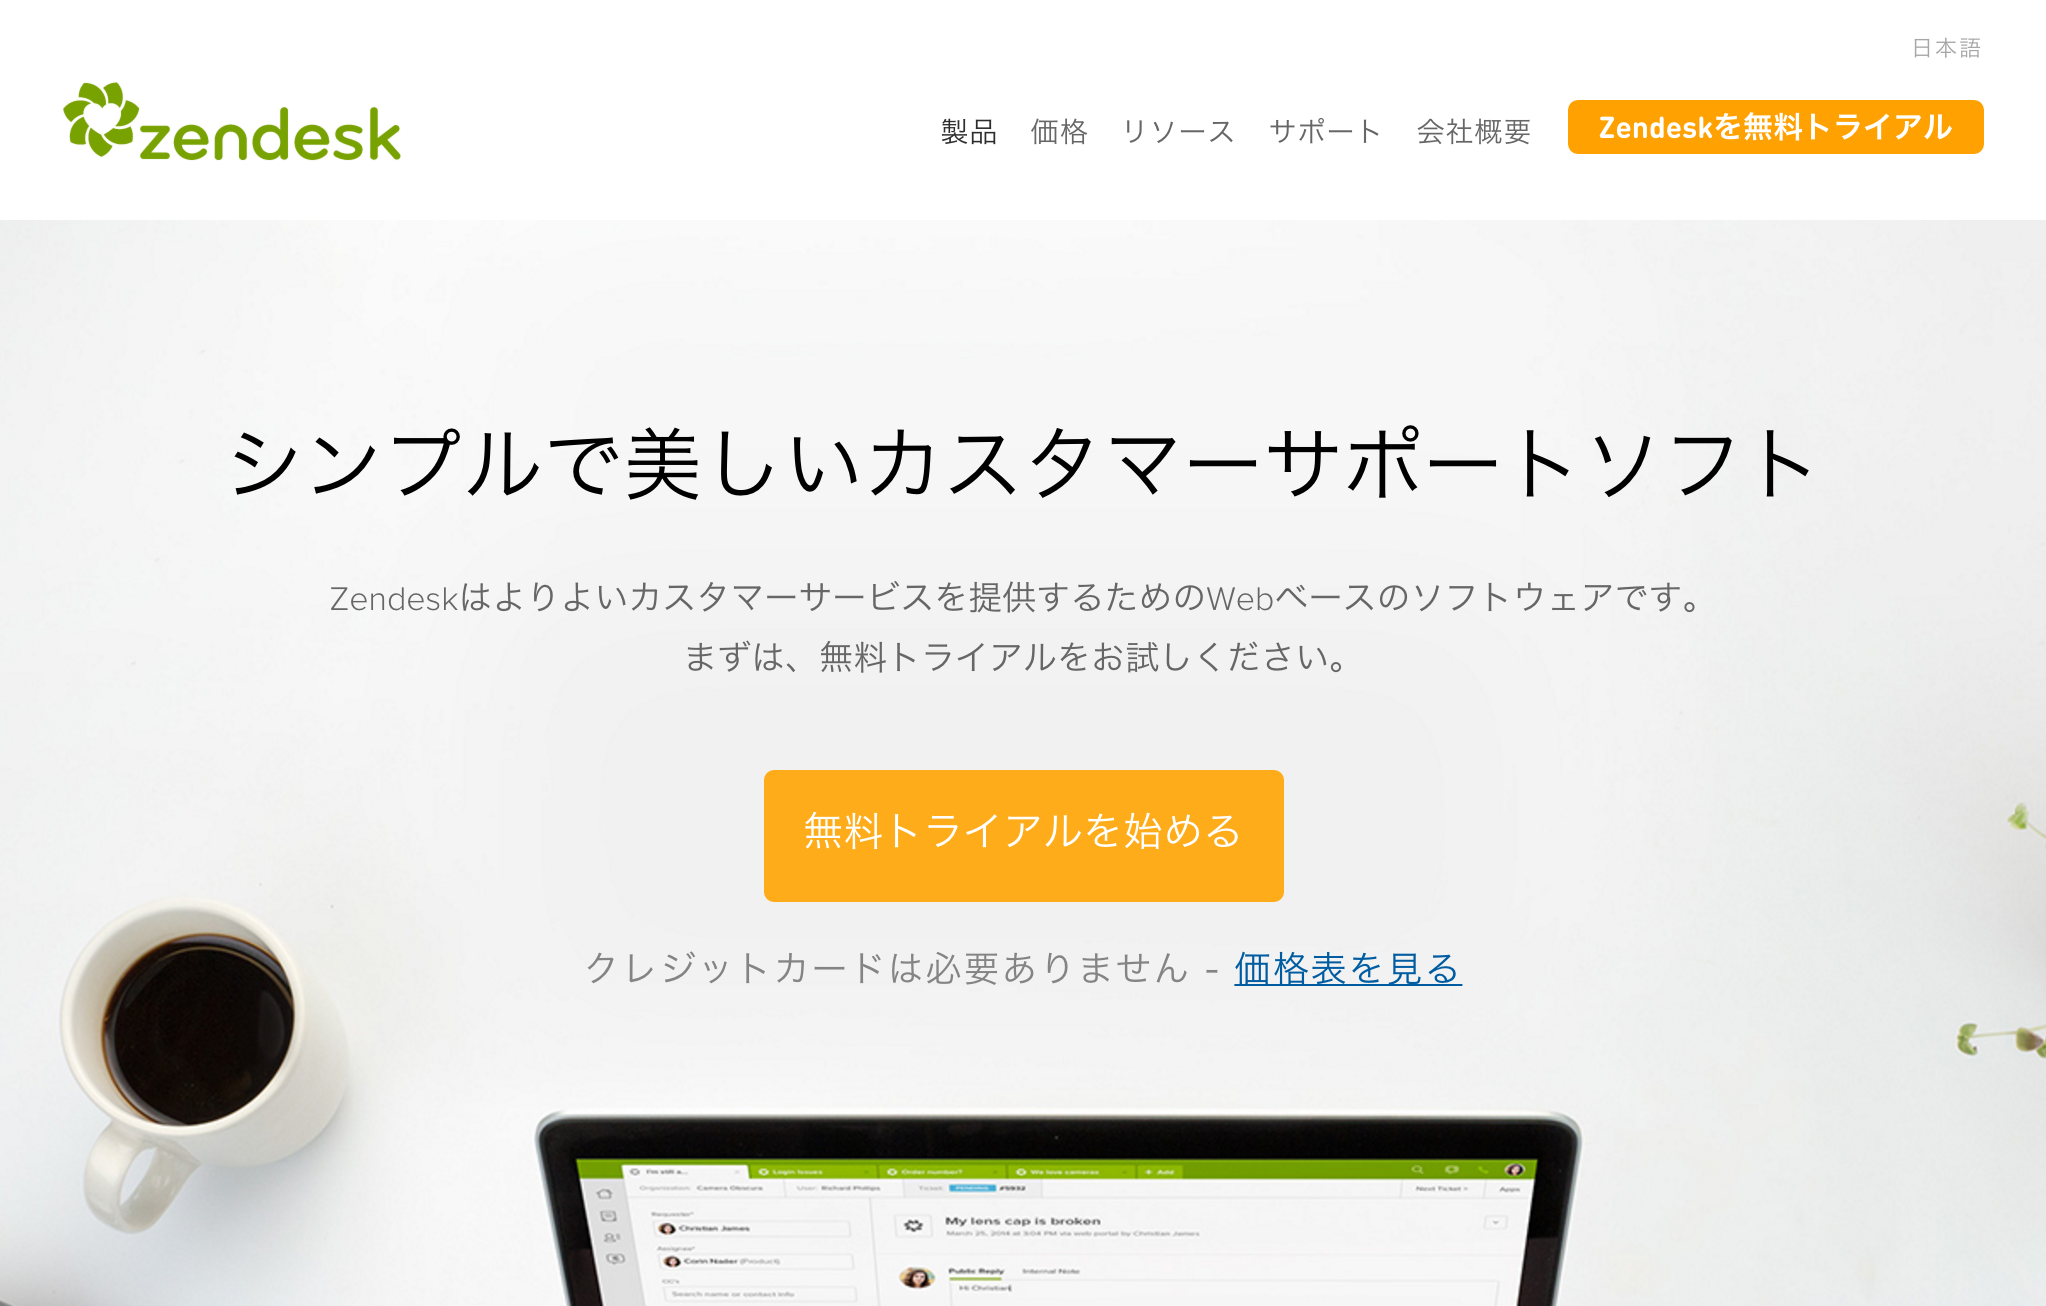 Zendesk Japan   カスタマーサポートソフトウェア   ヘルプデスクシステム.png